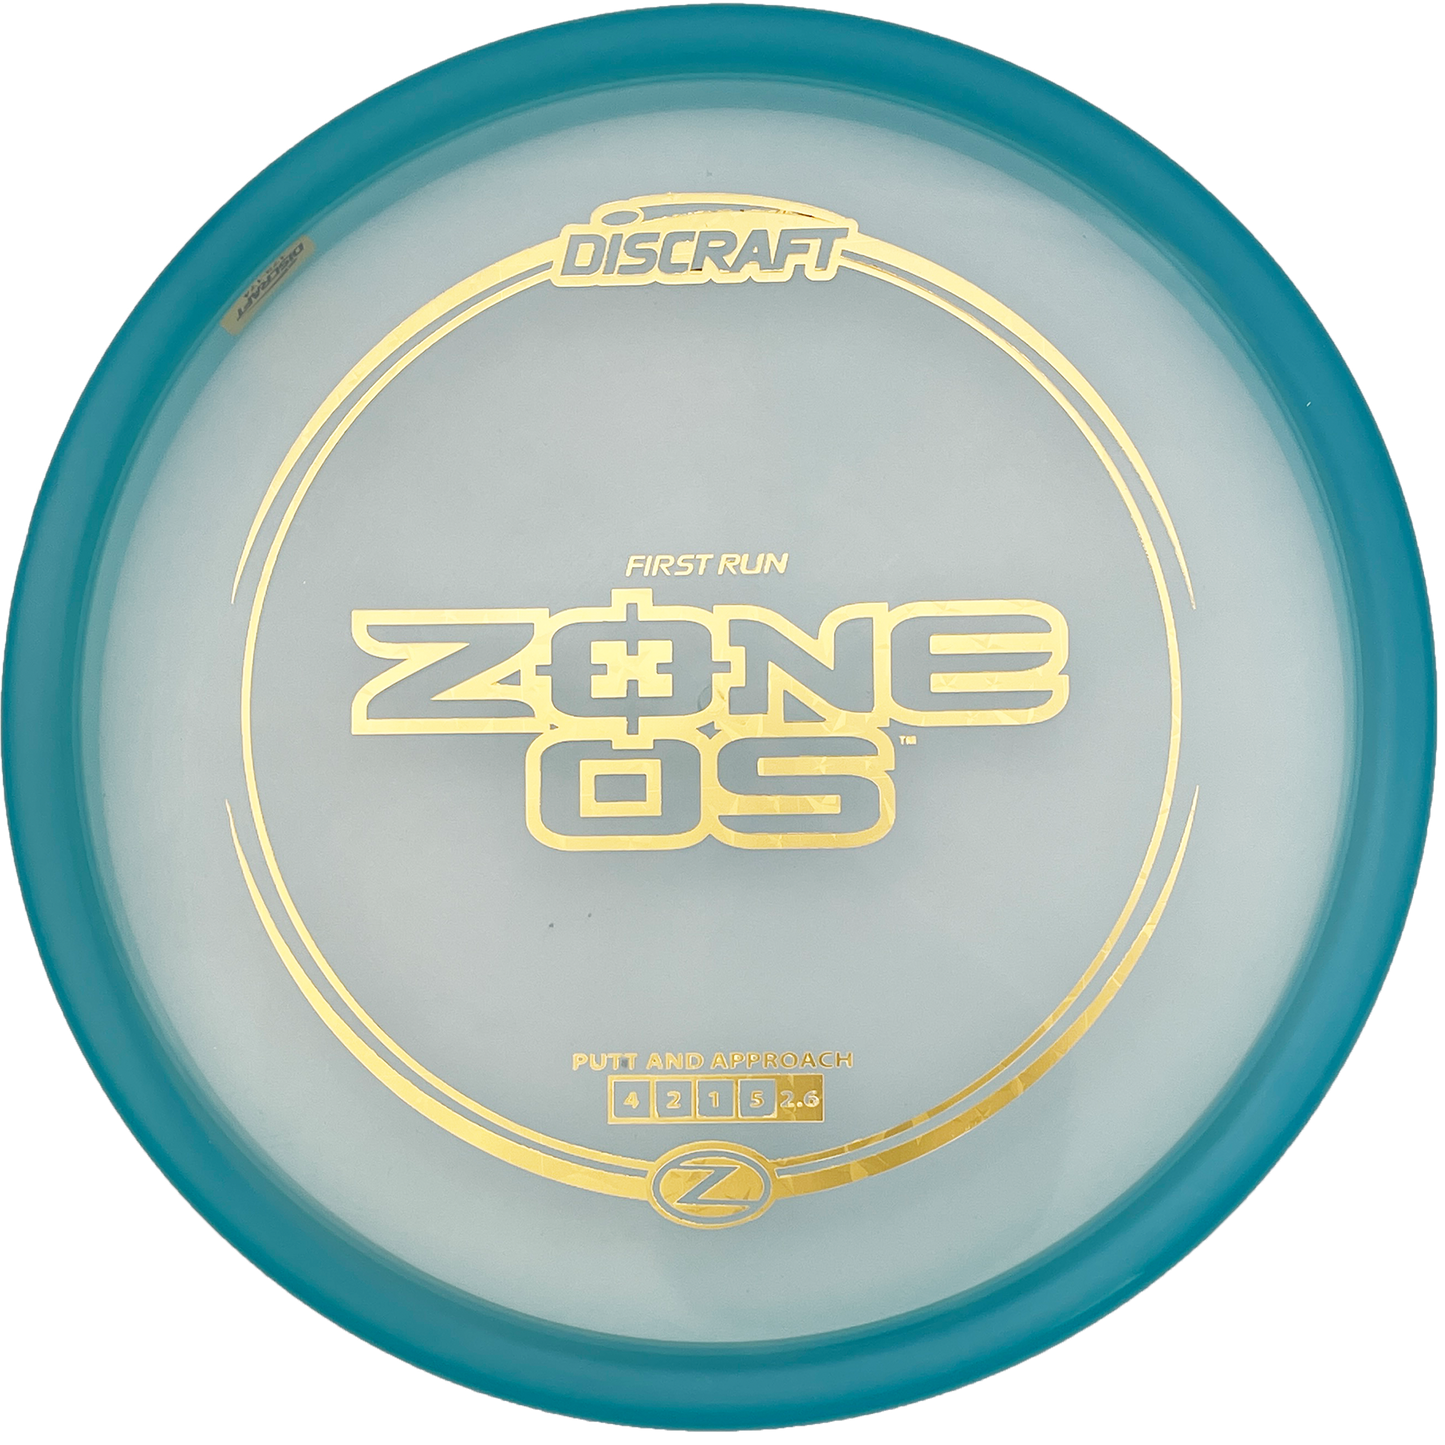 Discraft Zone OS - First Run - Z Line - Blue